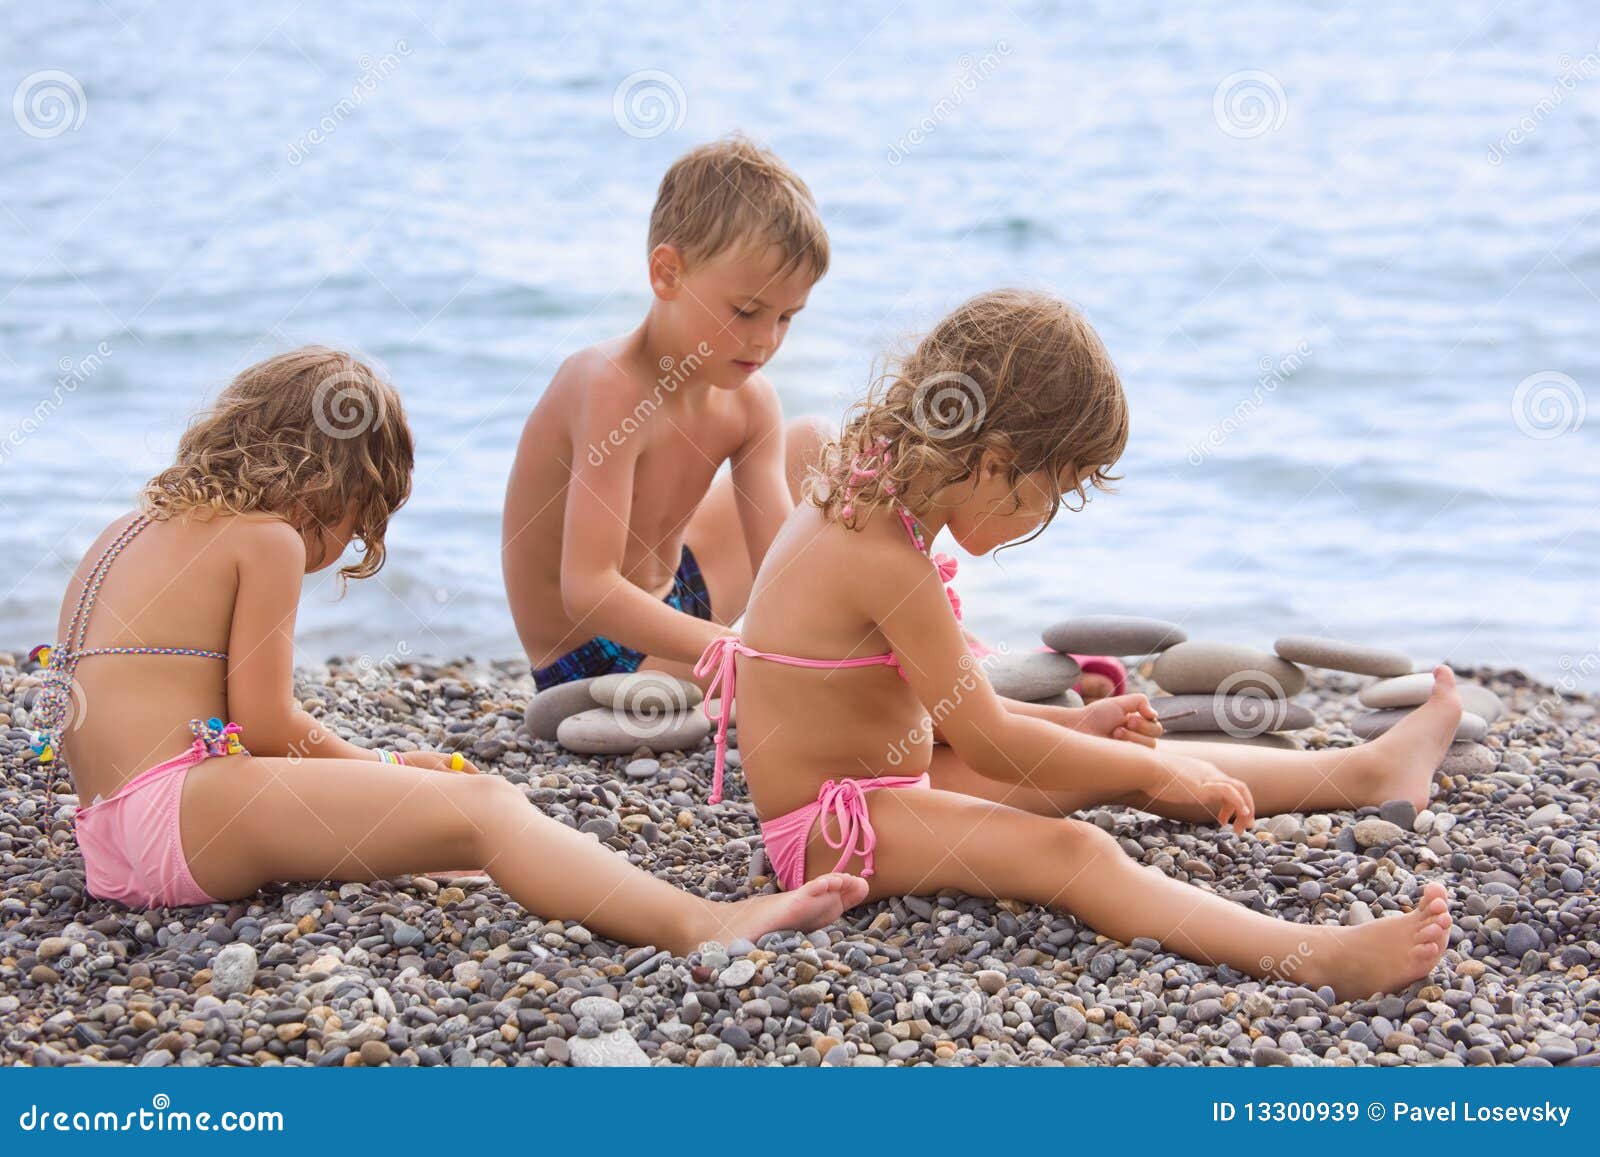 children sitting on stony beach, creates pyramid